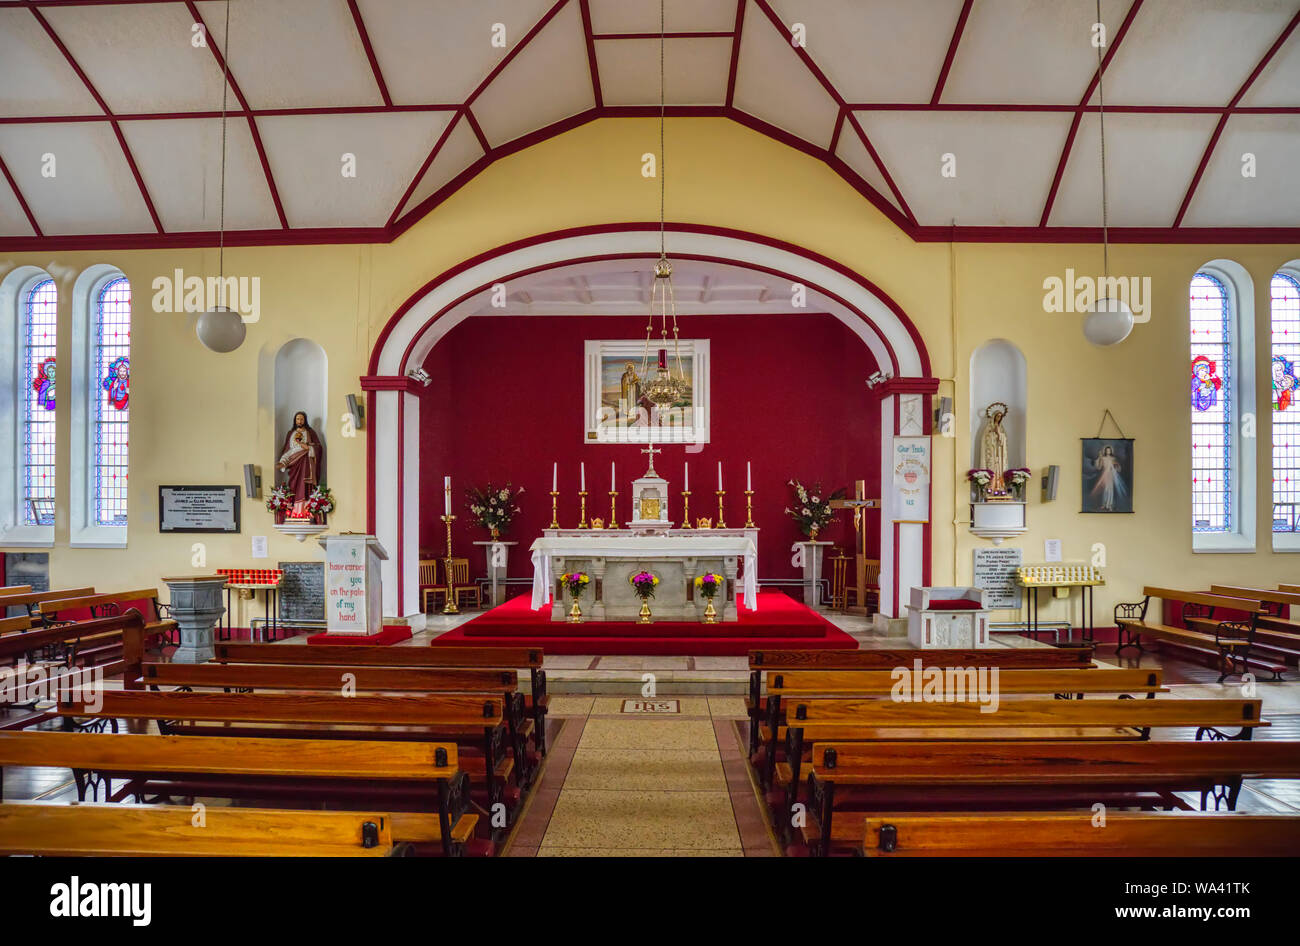 Innenraum der St. Patricks Kirche im Dorf Aghagower im County Mayo Irland Stockfoto